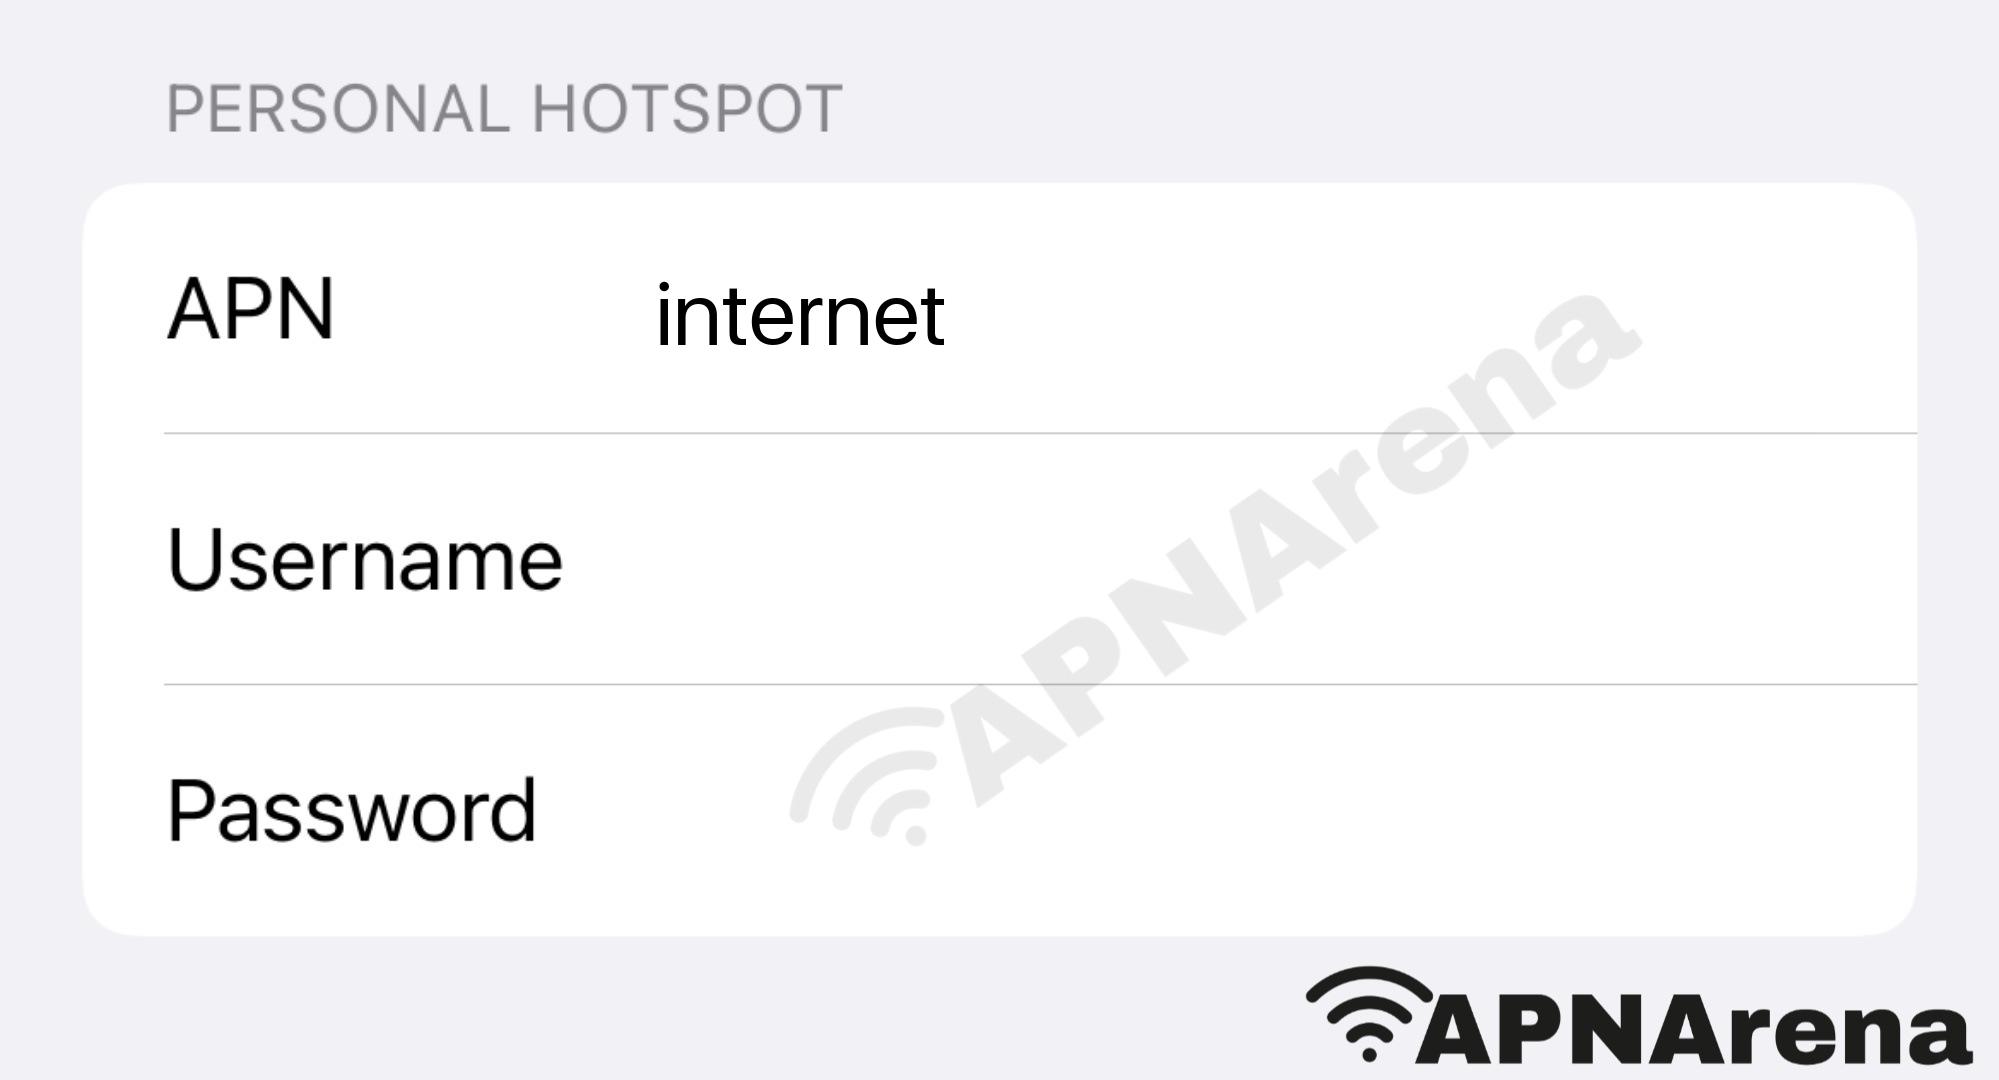 APUA Personal Hotspot Settings for iPhone